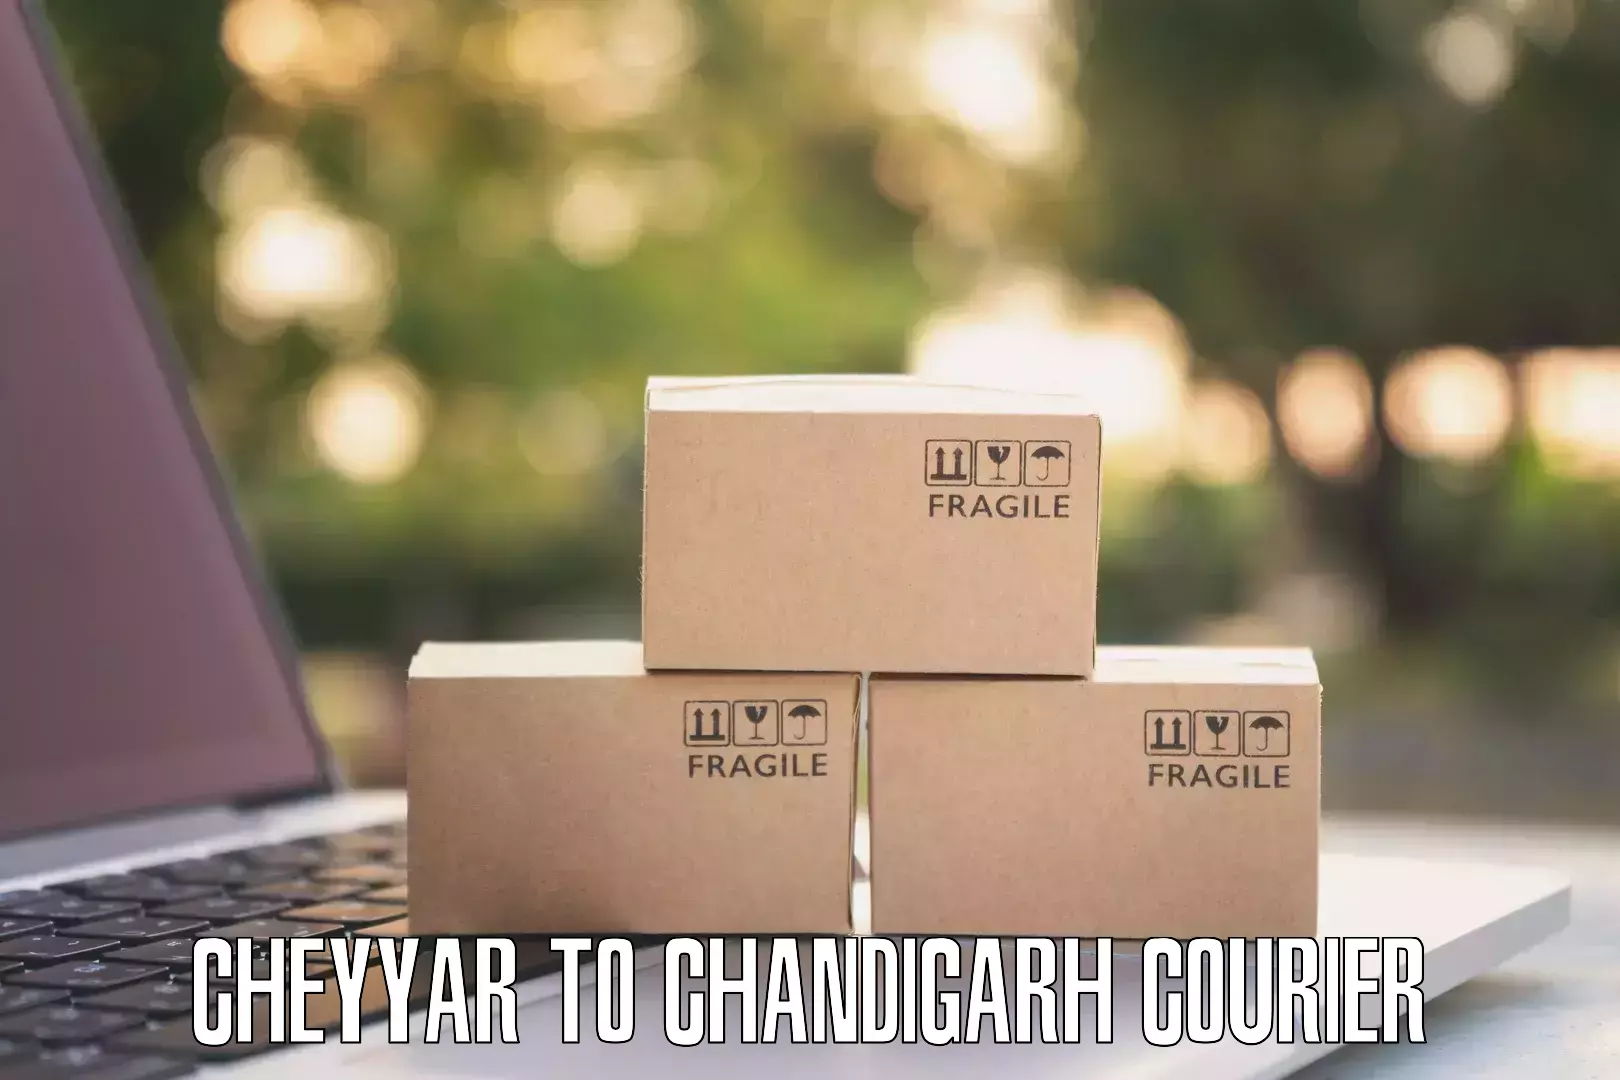 Customer-centric shipping Cheyyar to Chandigarh